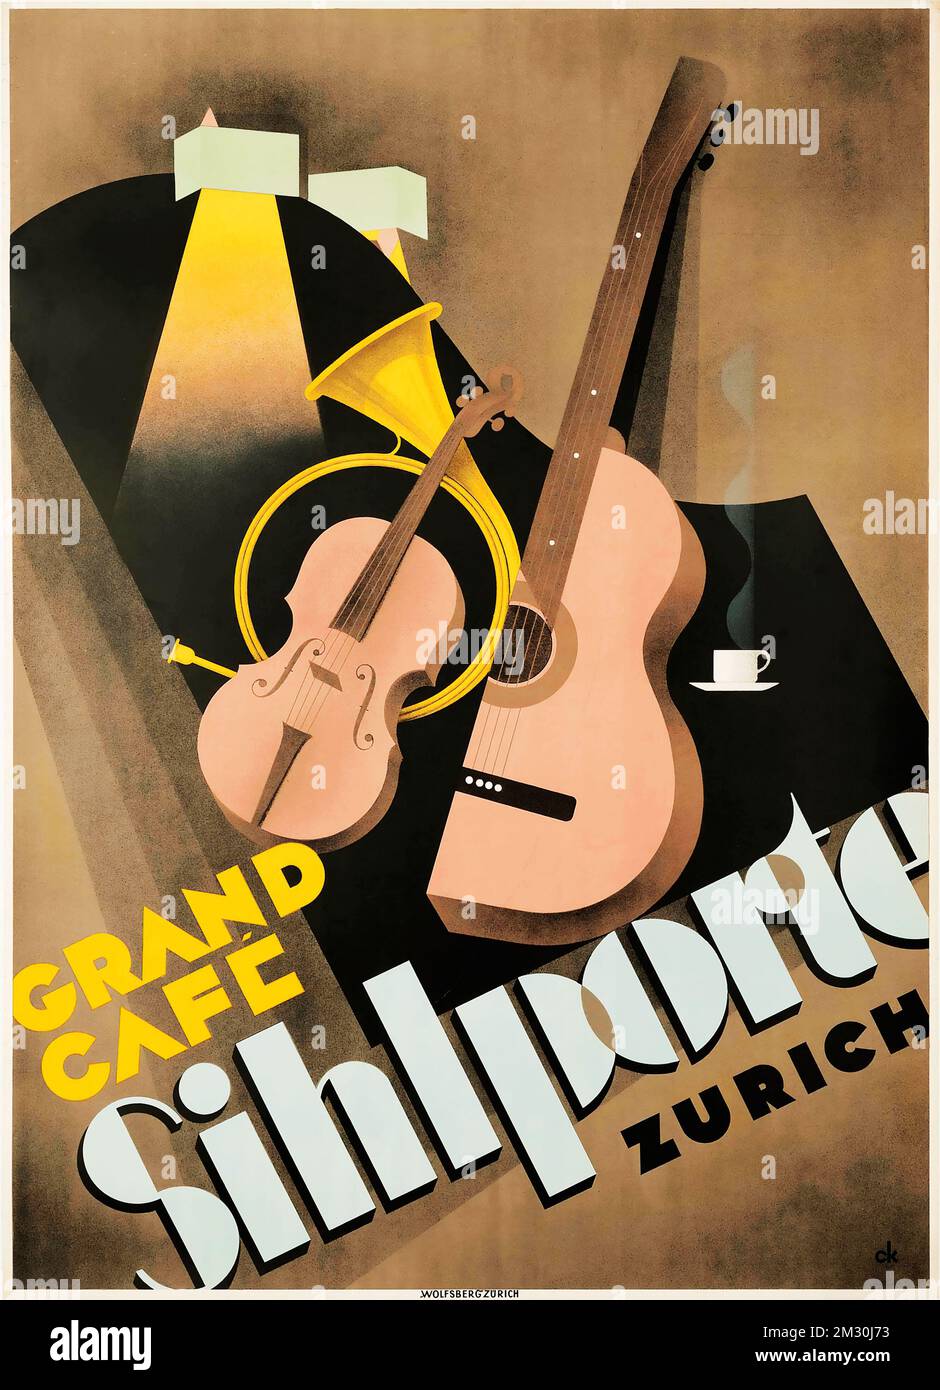 Vintage advertising poster - GRAND CAFE SIHLPORTE, ZÜRICH 1933 Stock Photo